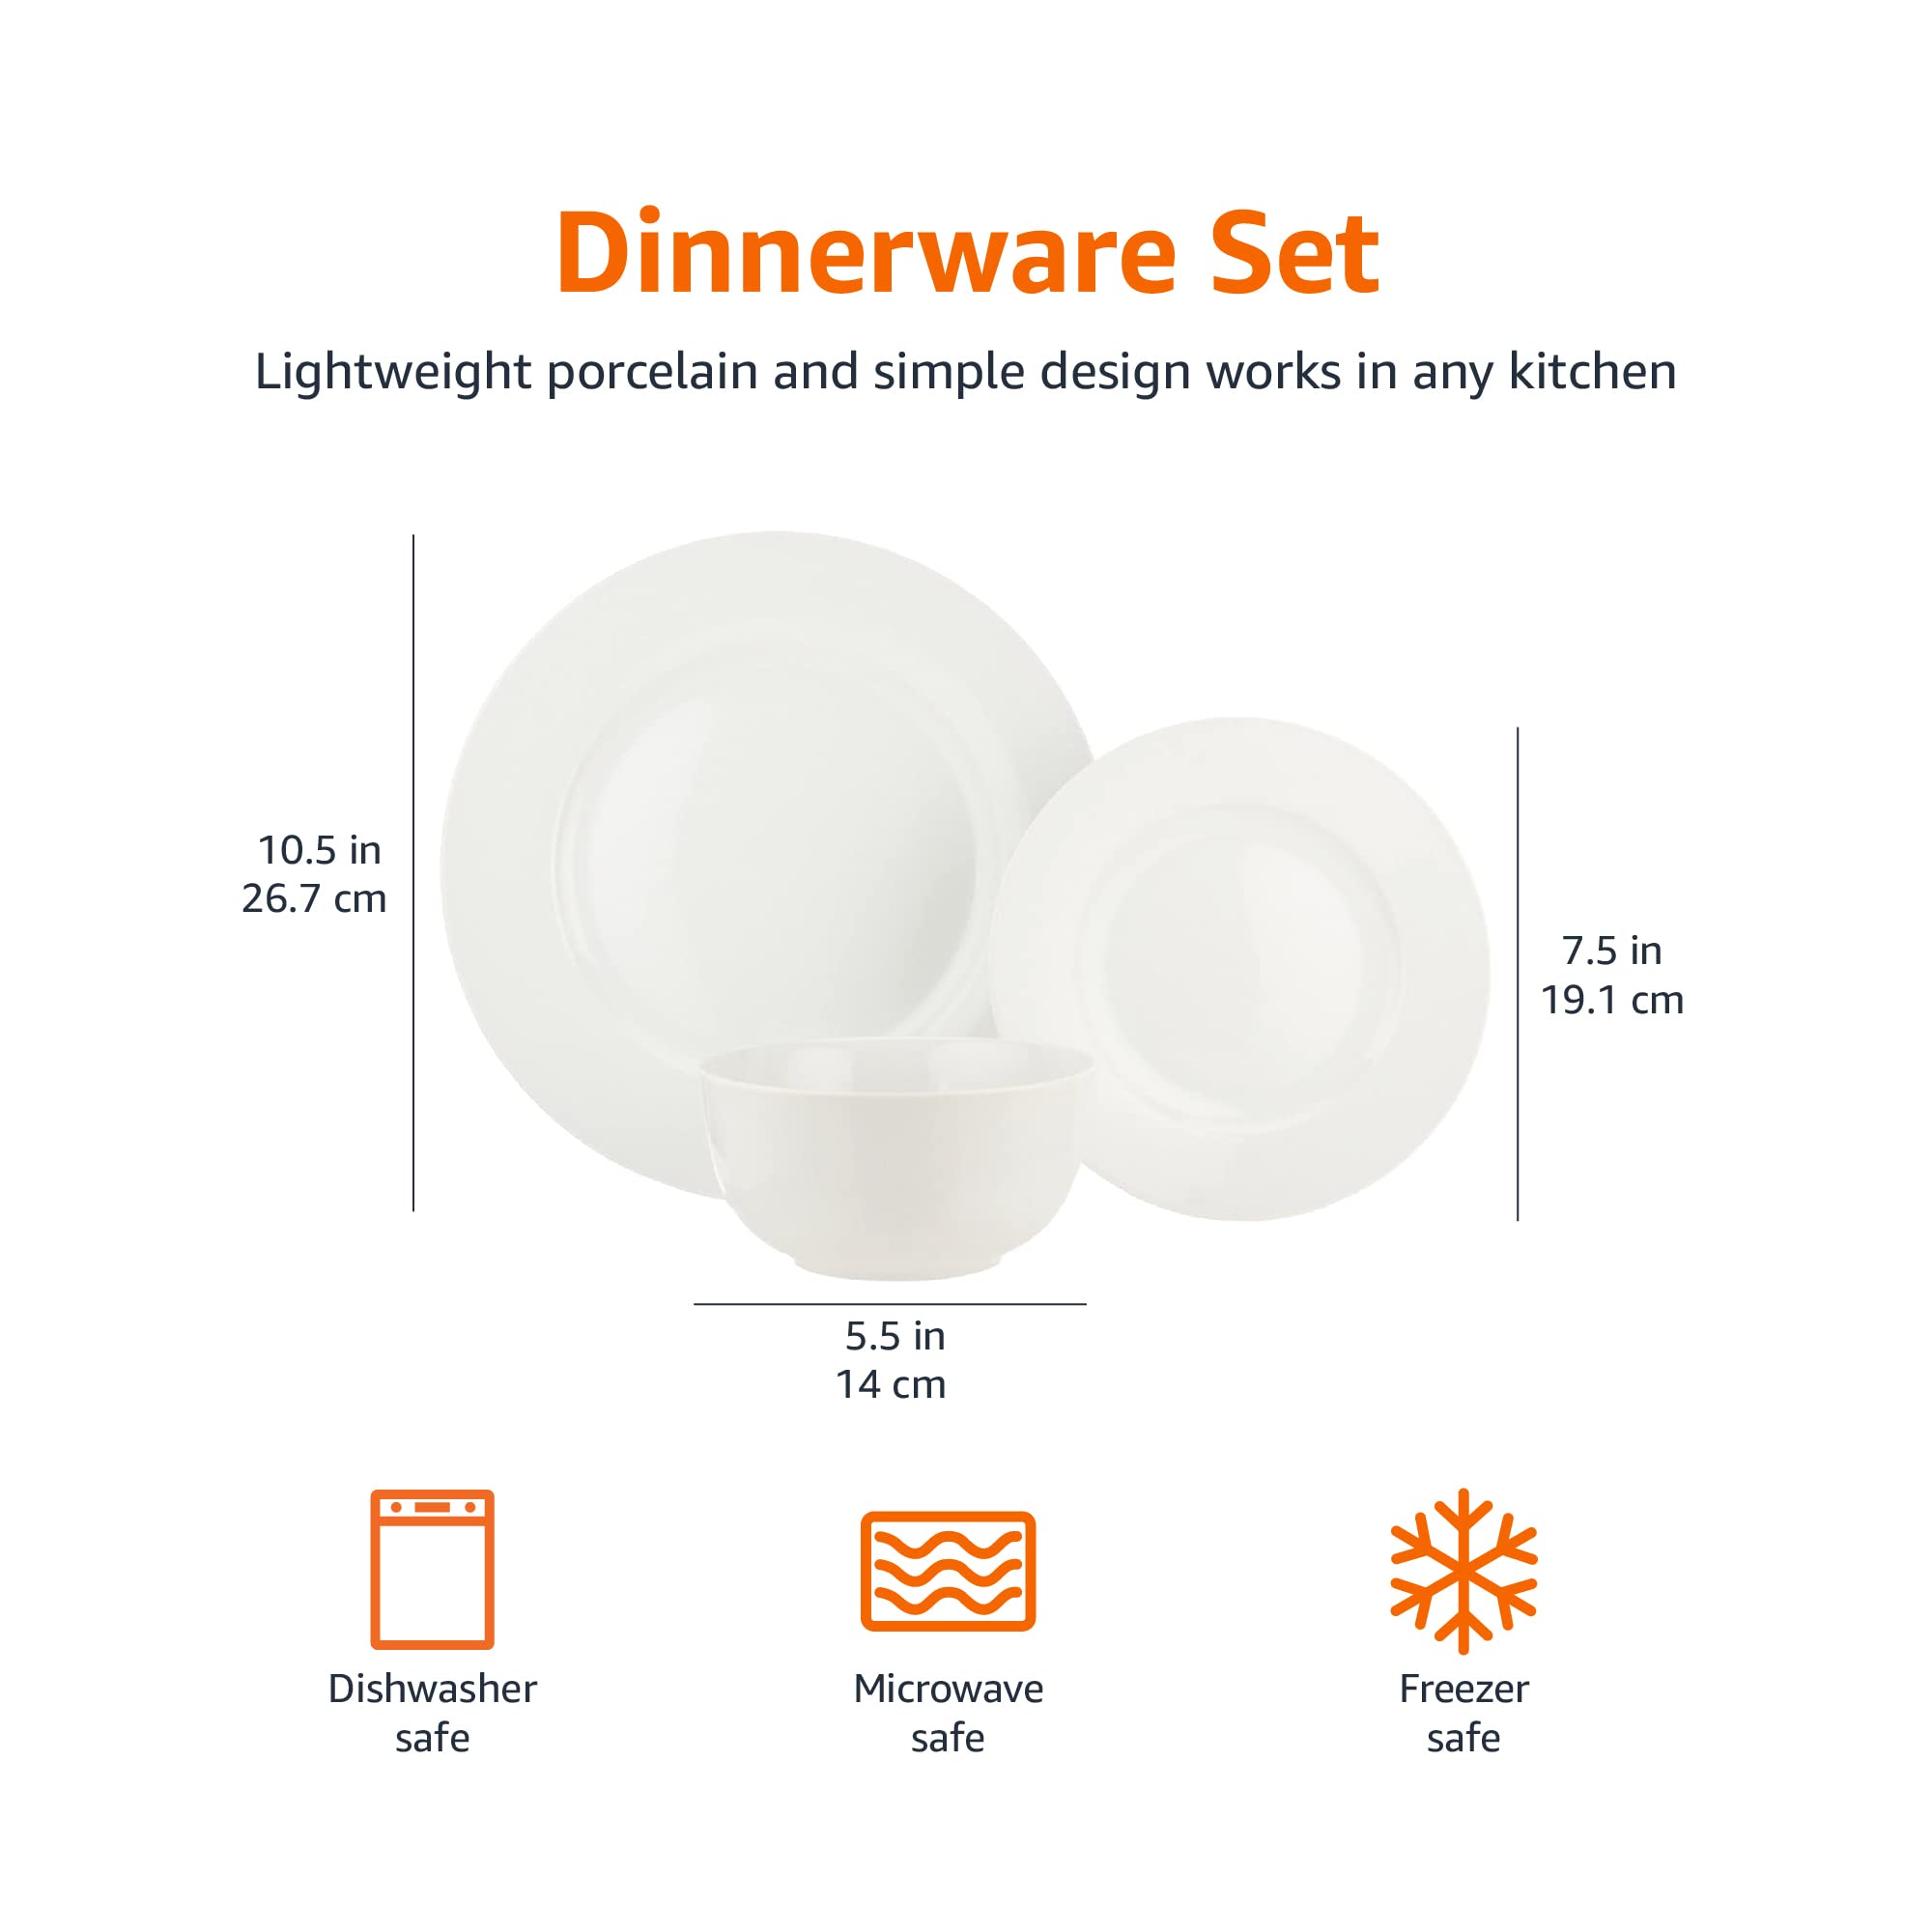 Amazon Basics 18-Piece Kitchen Dinnerware Set, Plates, Dishes, Bowls, Service for 6 - White